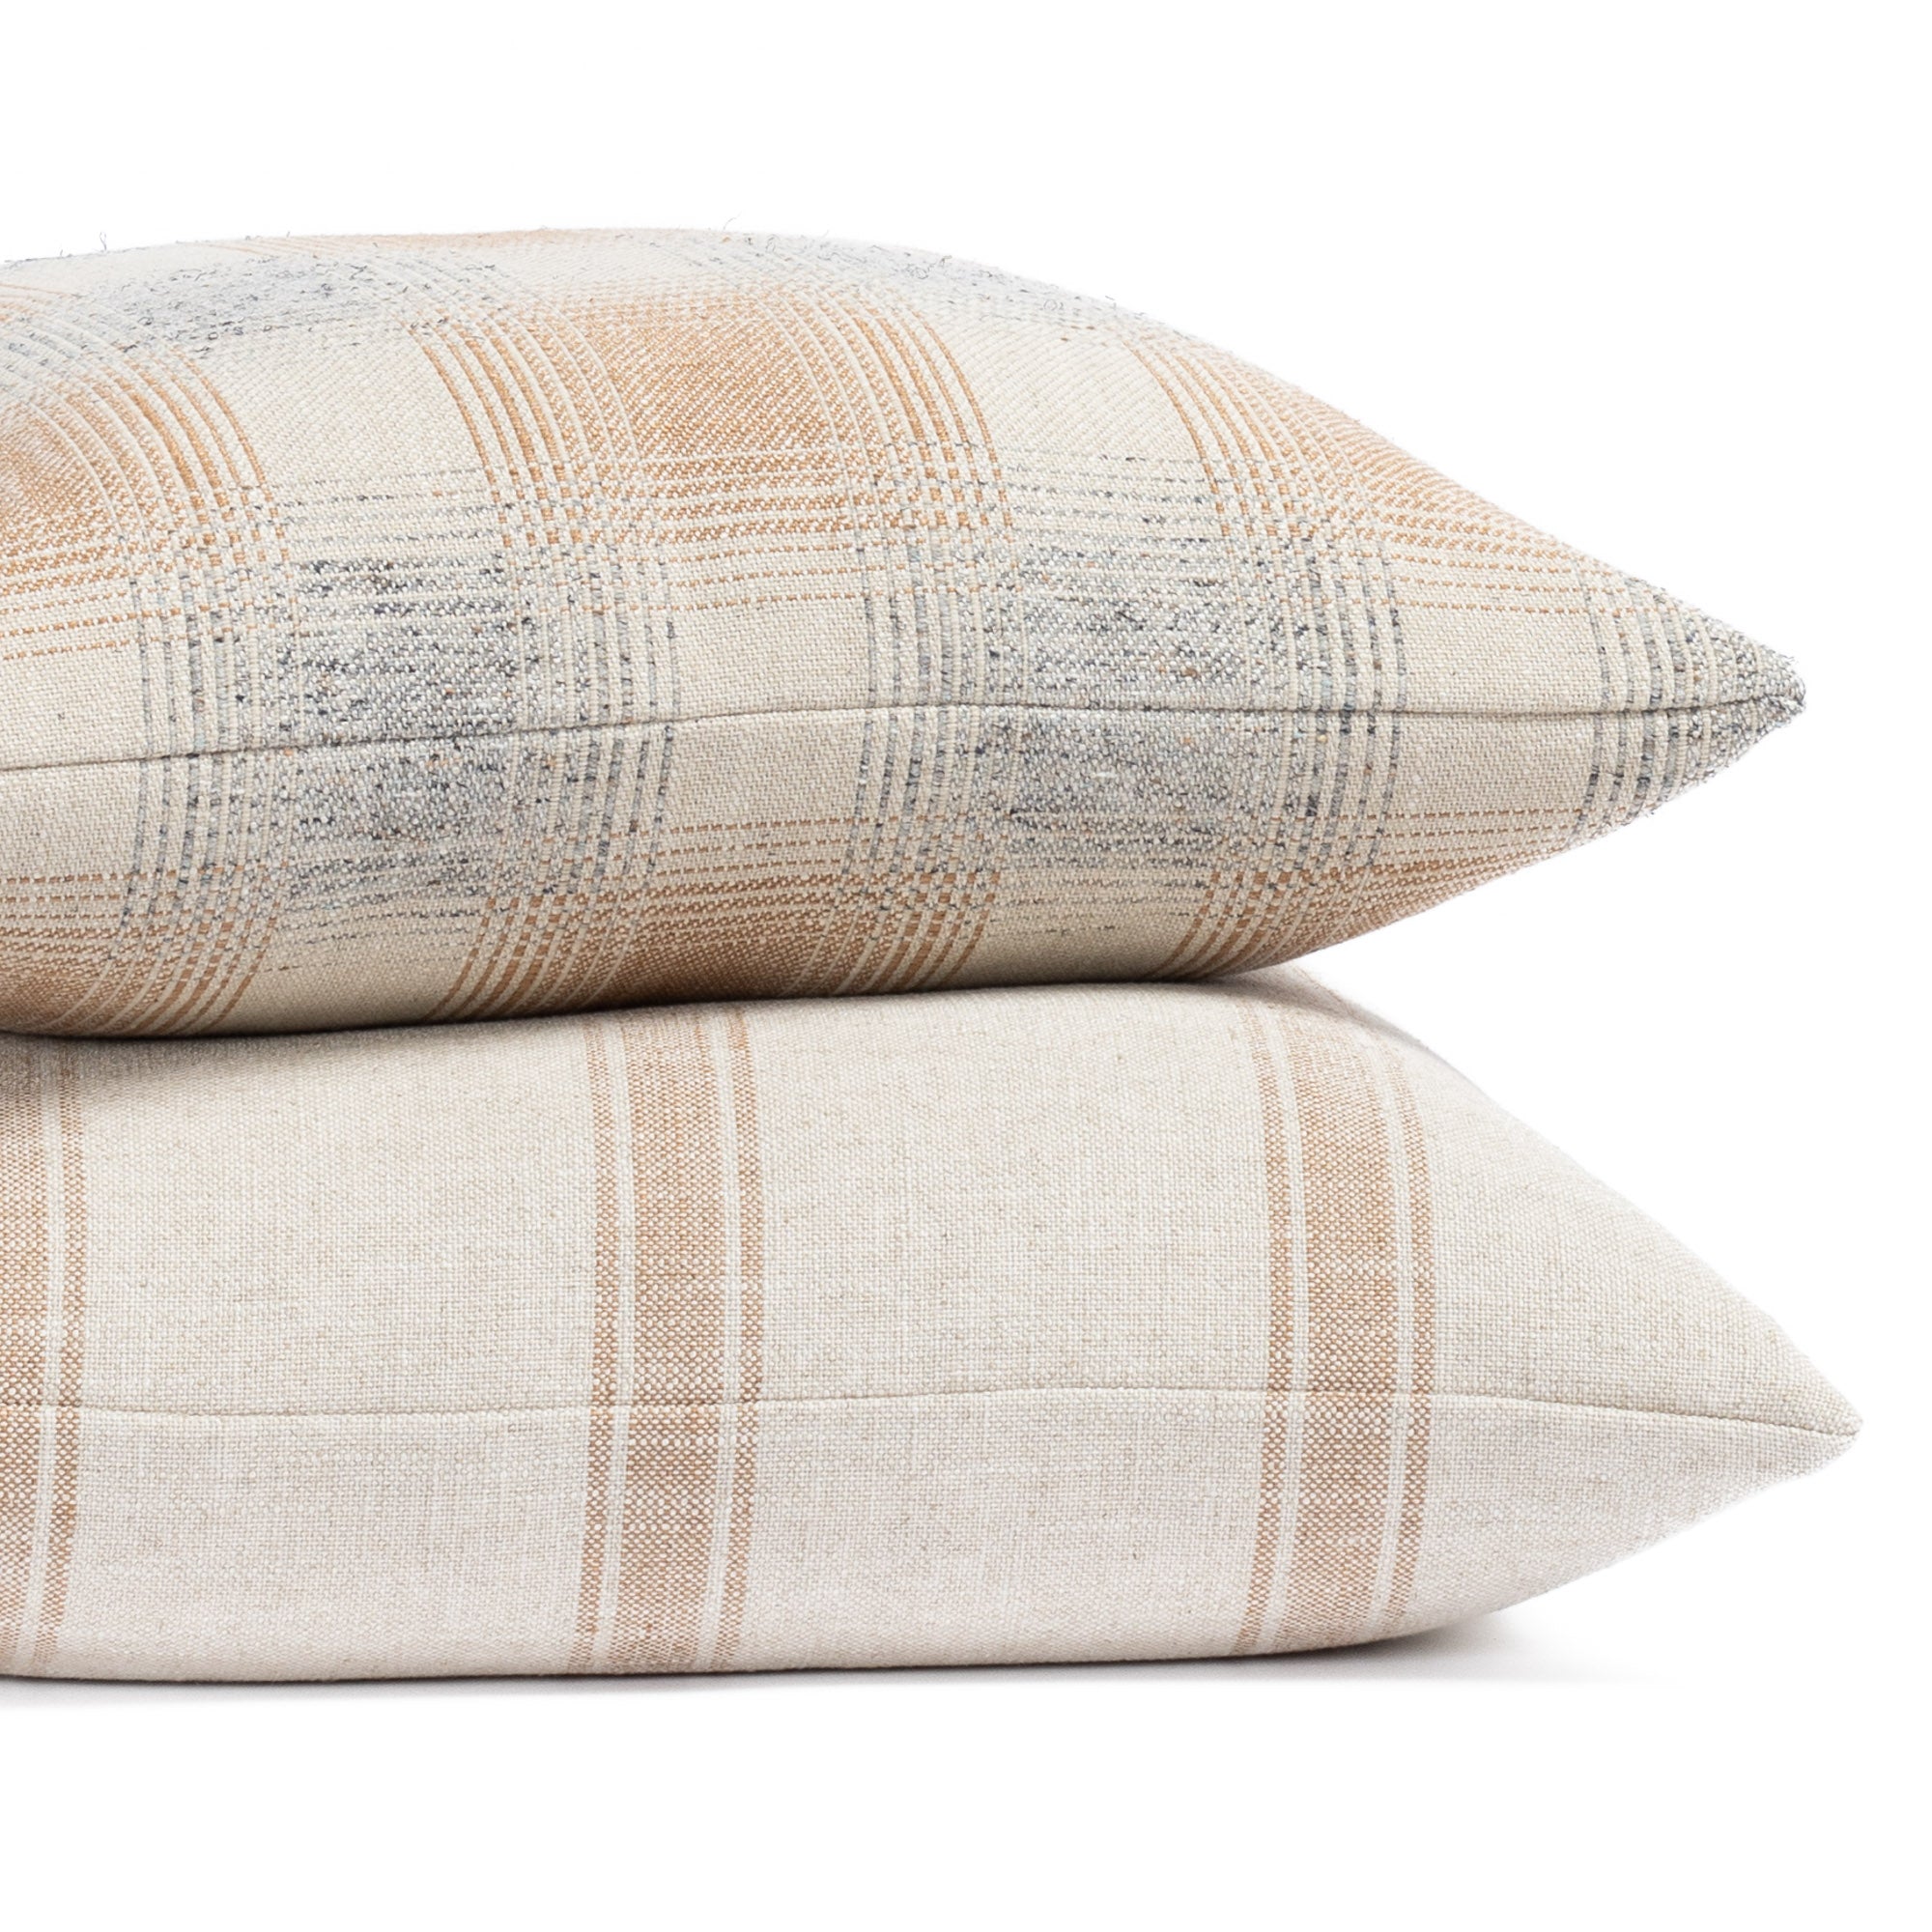 Tonic Living modern farmhouse designer throw pillows